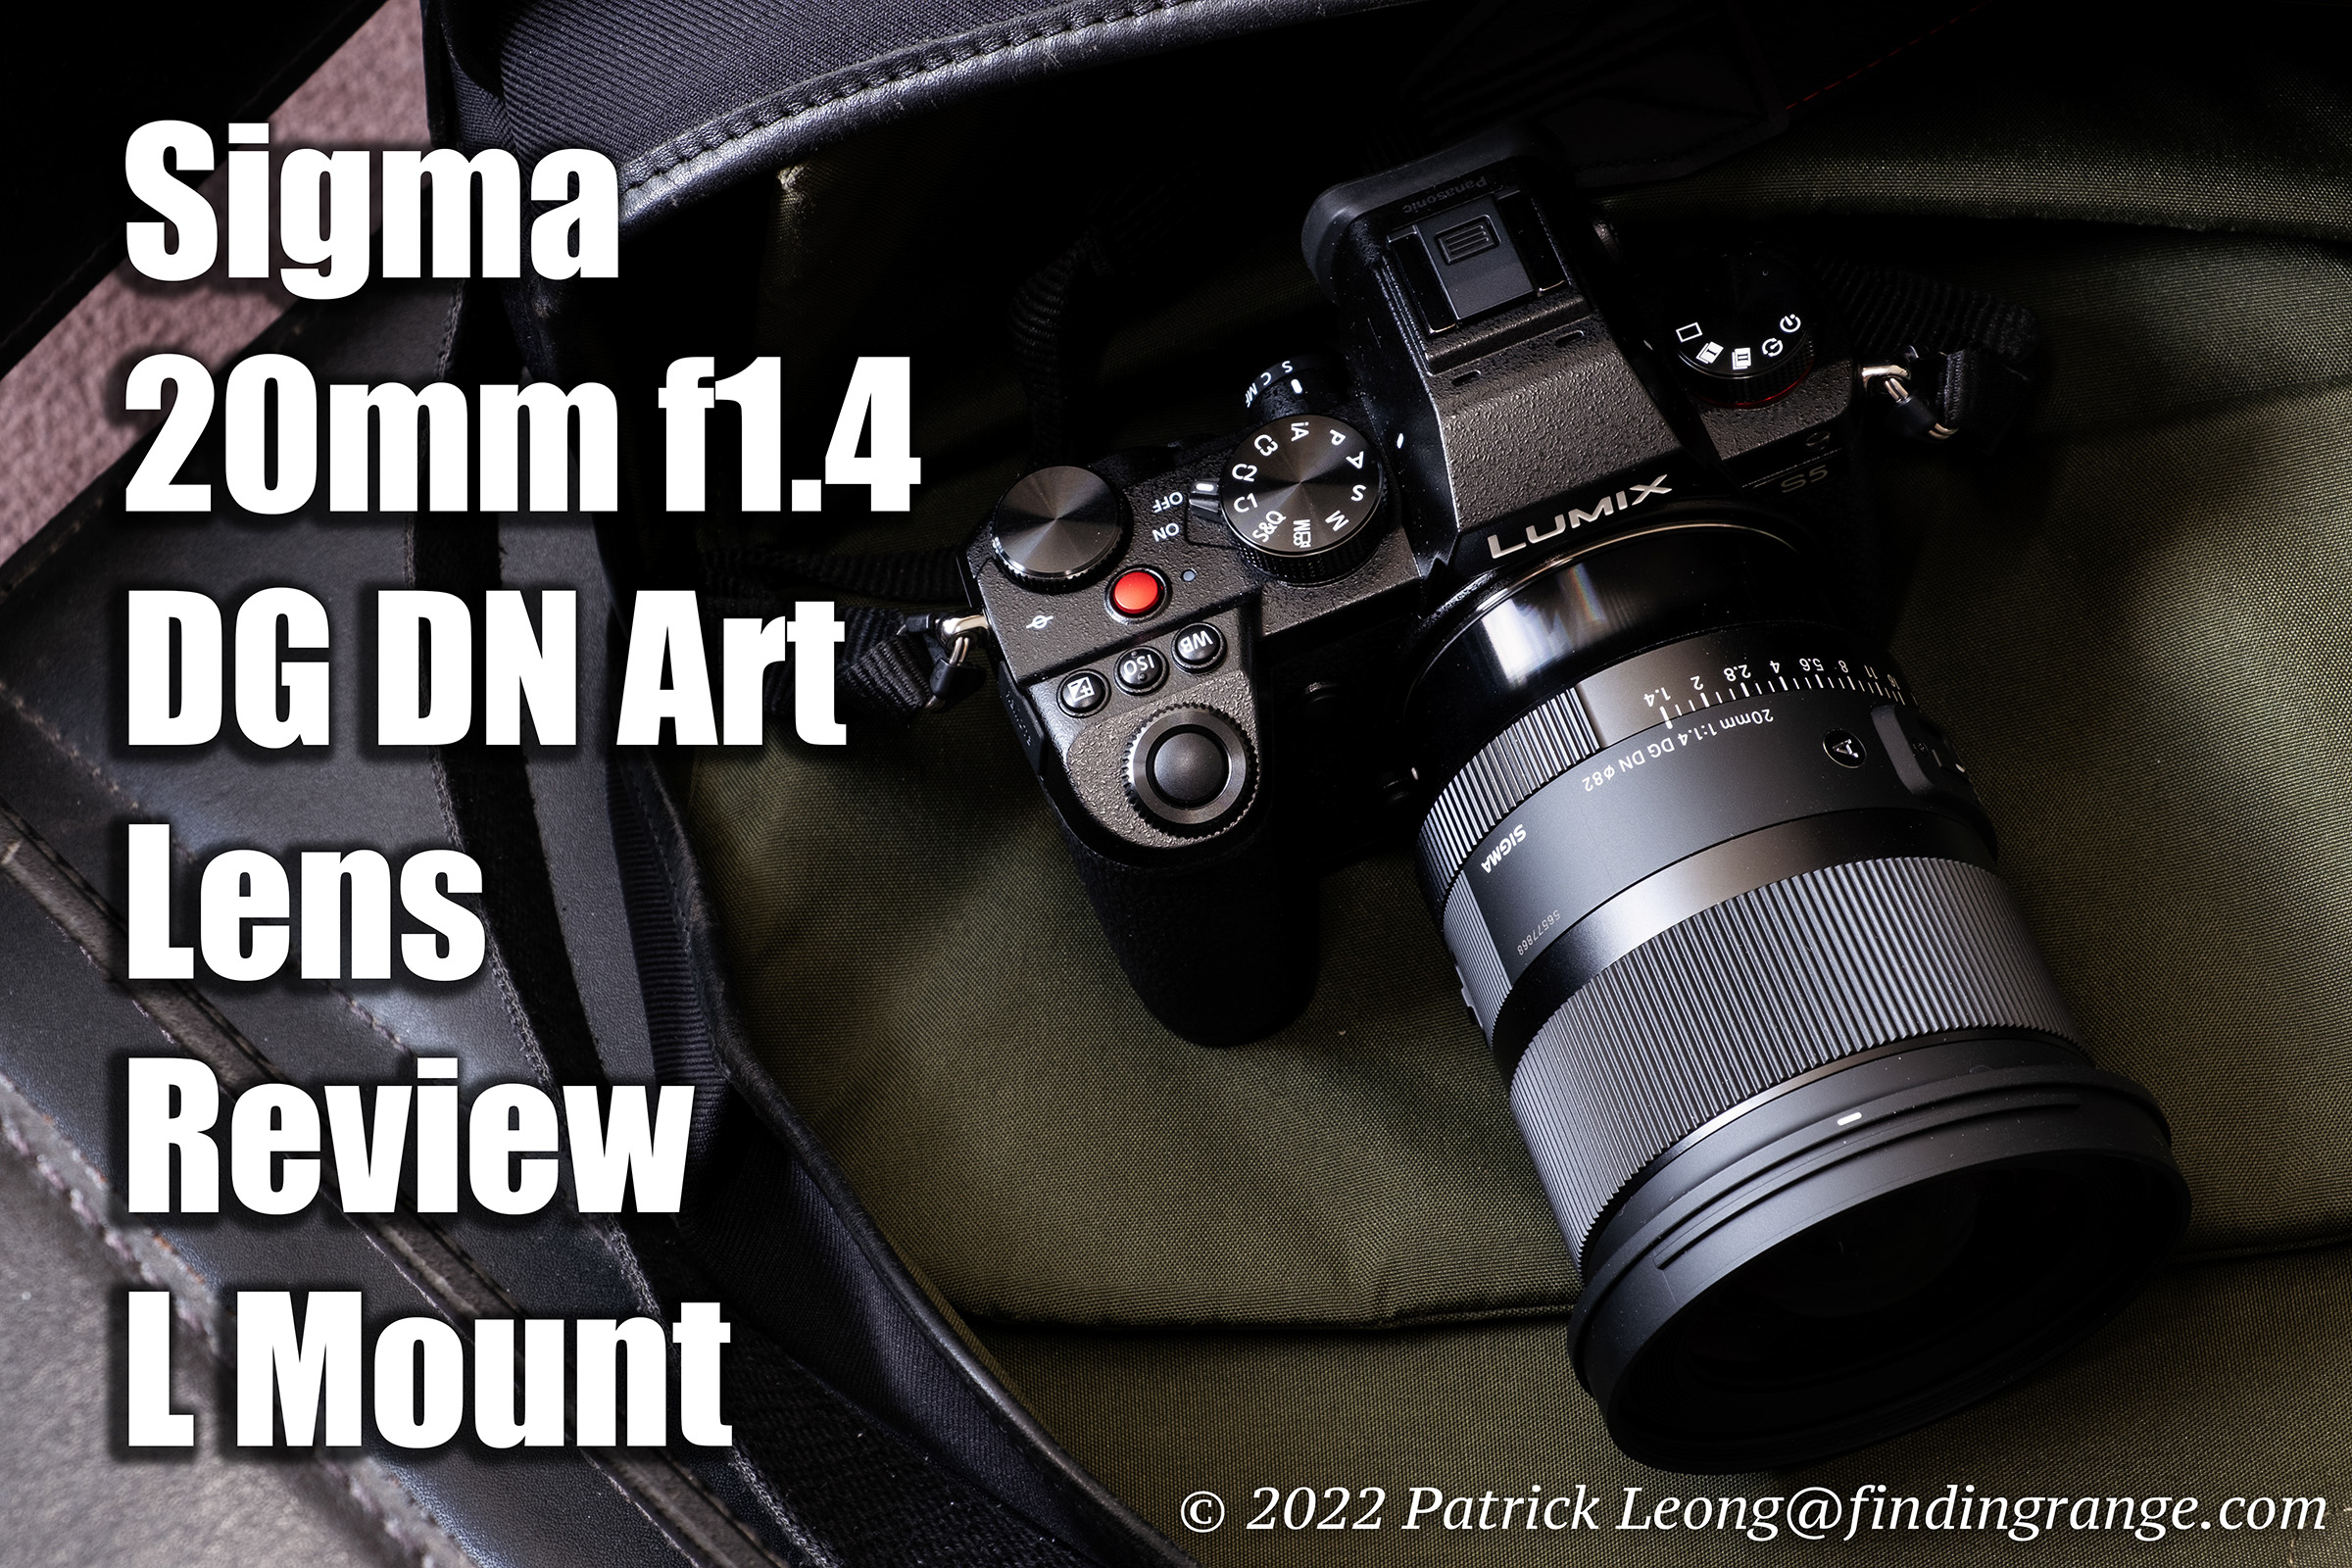 Sigma 20mm f1.4 DG DN Art Lens Review L Mount - Finding Range